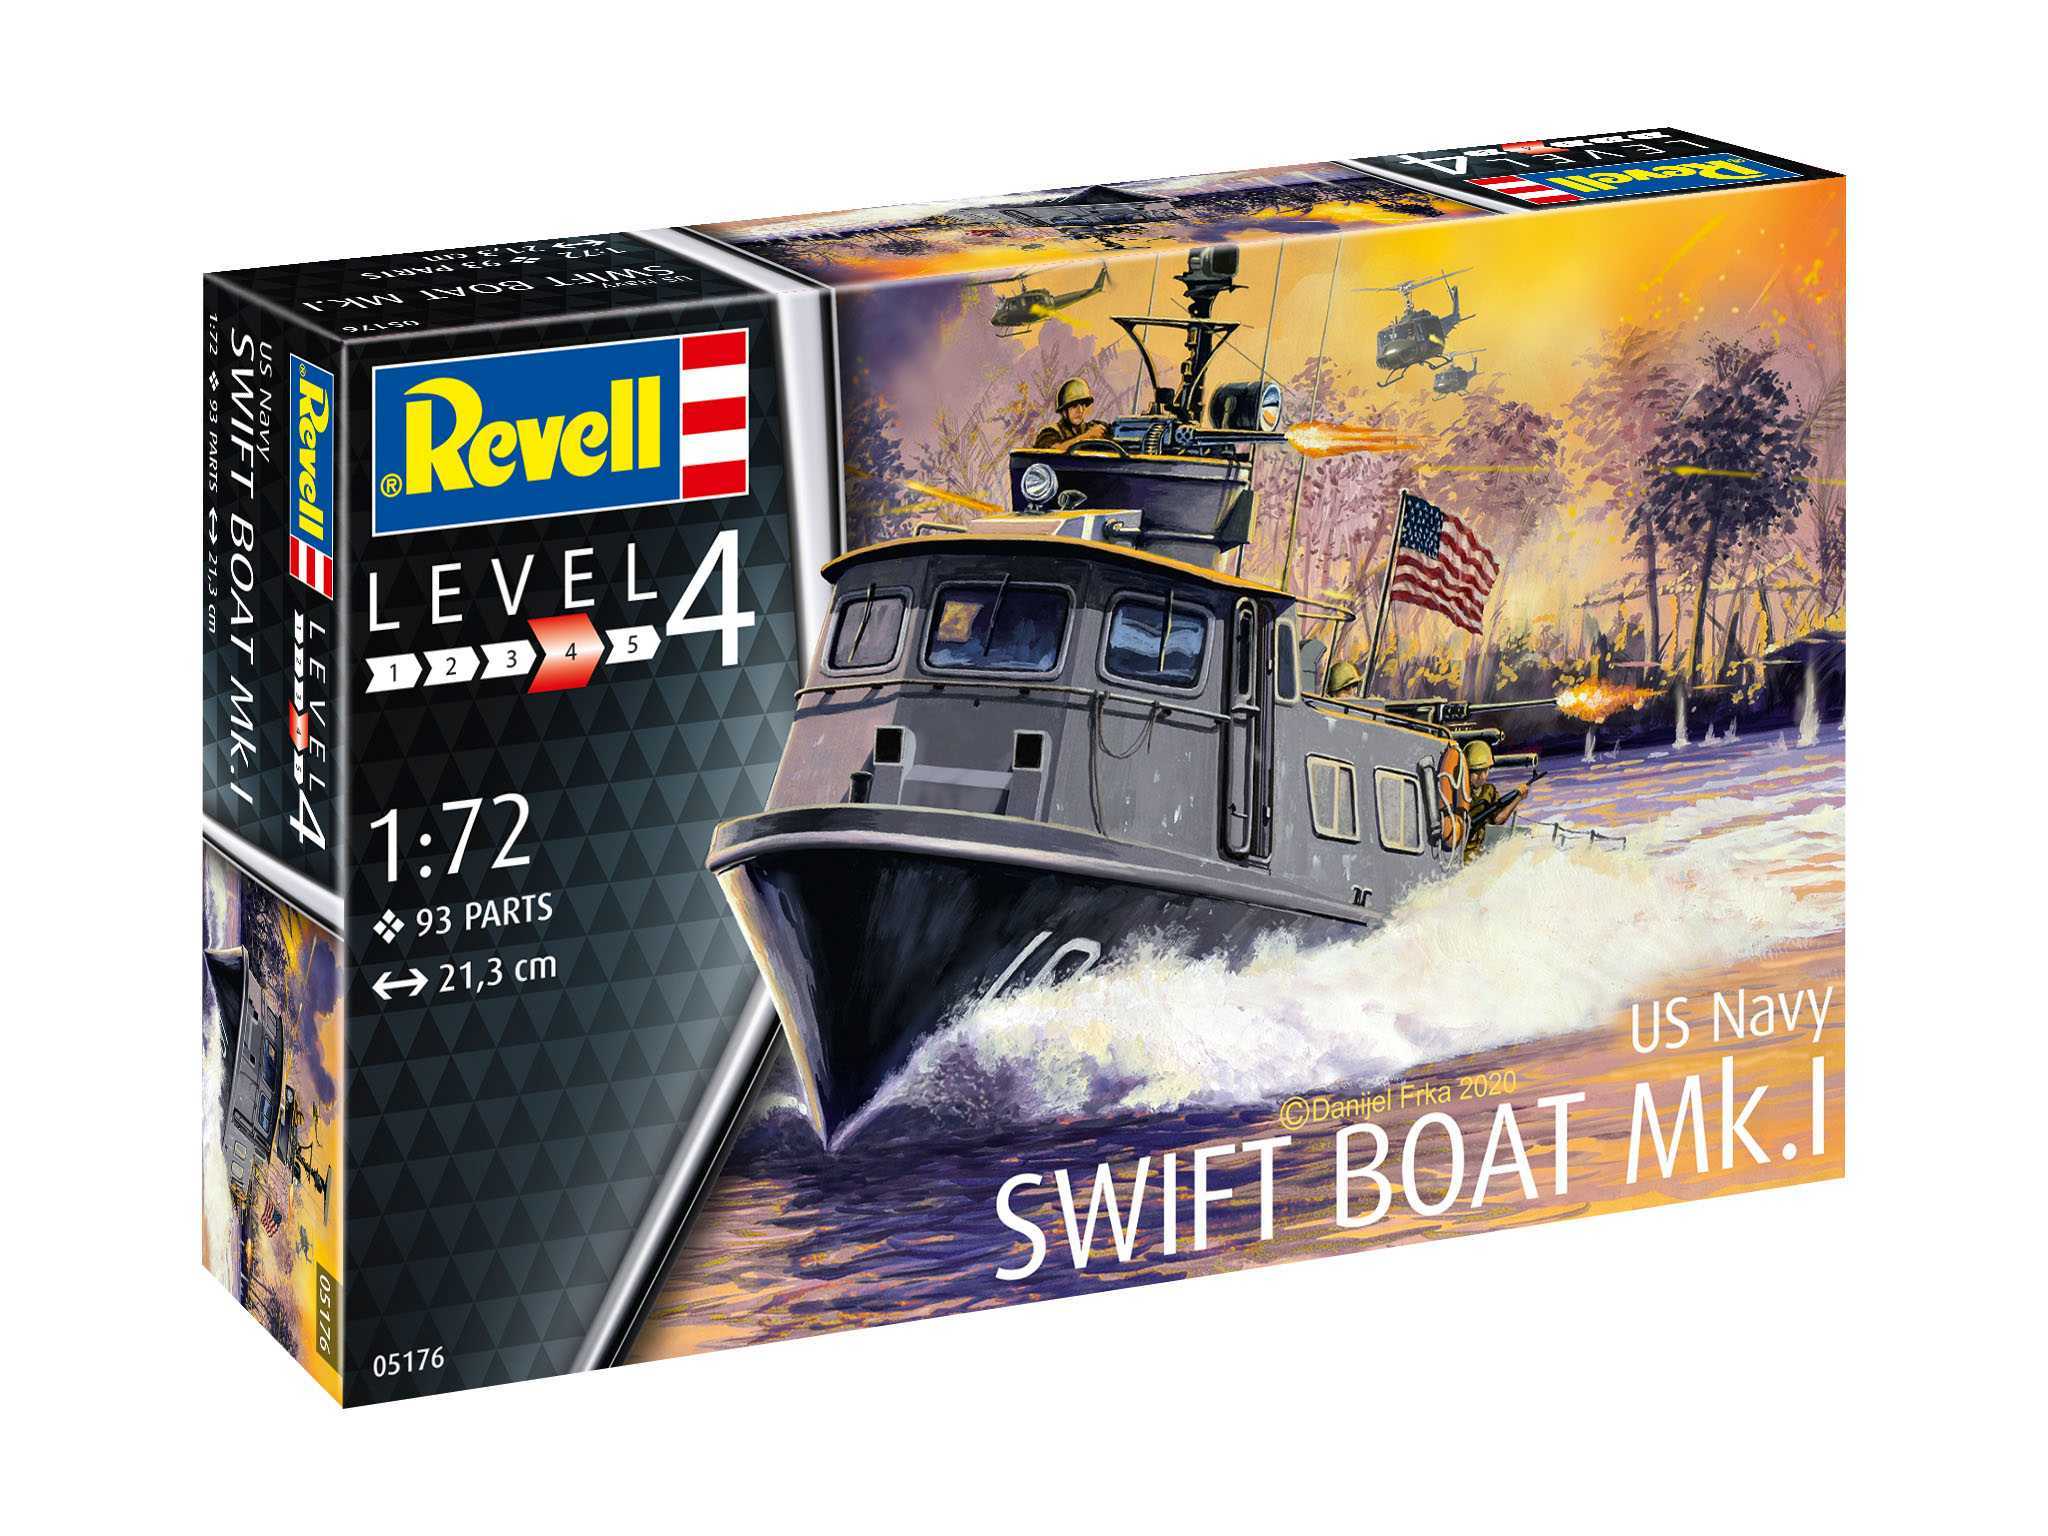 Fotografie ModelSet loď 65176 - US Navy SWIFT BOAT Mk.I (1:72)